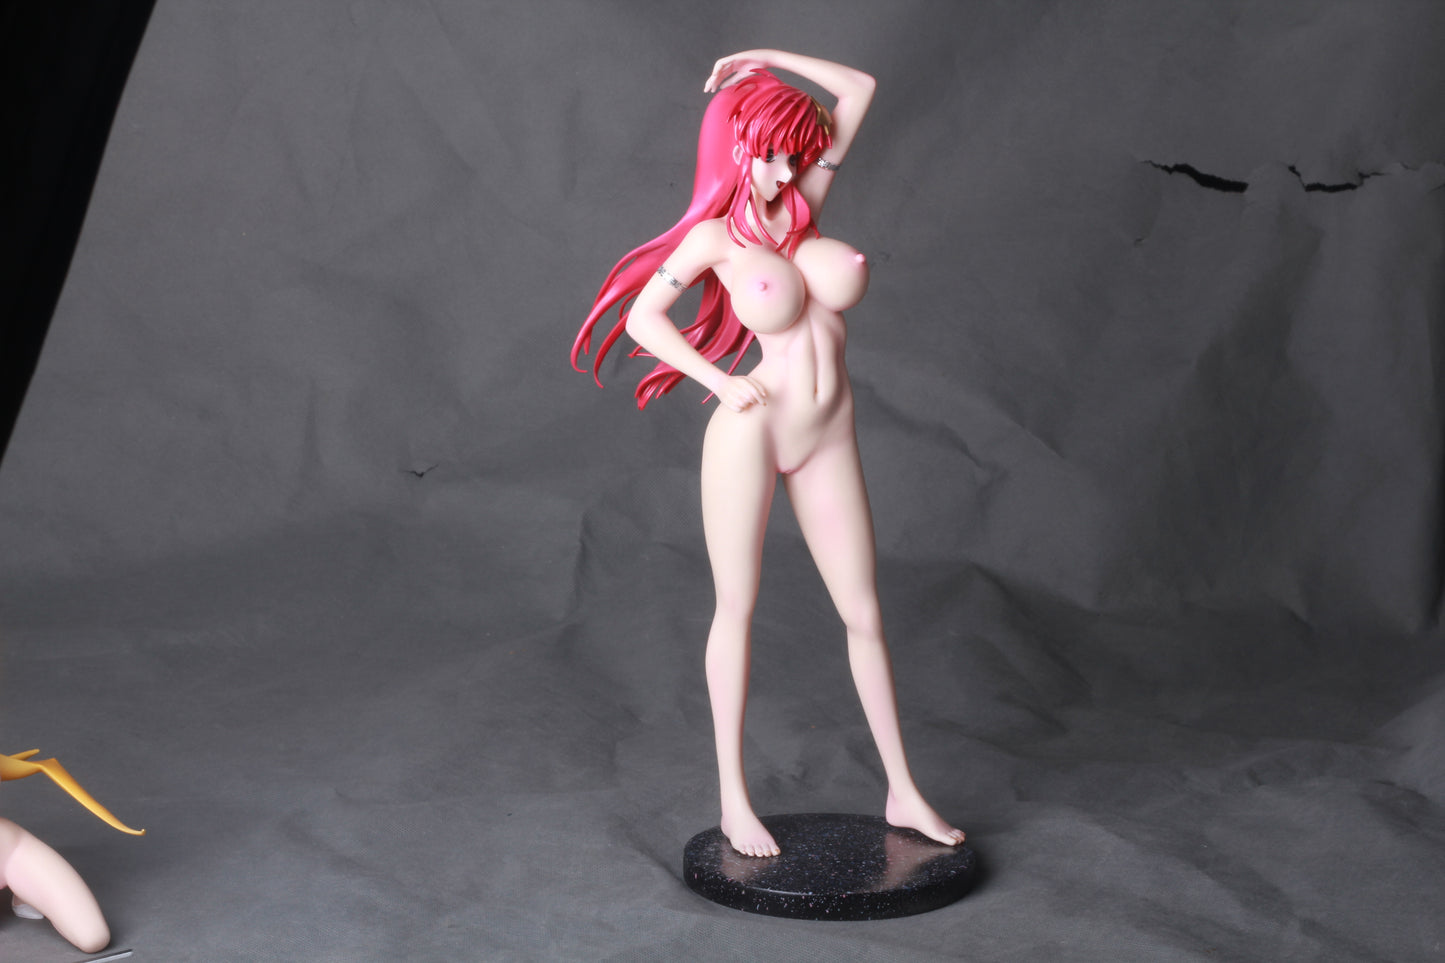 MOBILE SUIT GUNDAM Lacus Clyne 1/6 naked anime figure